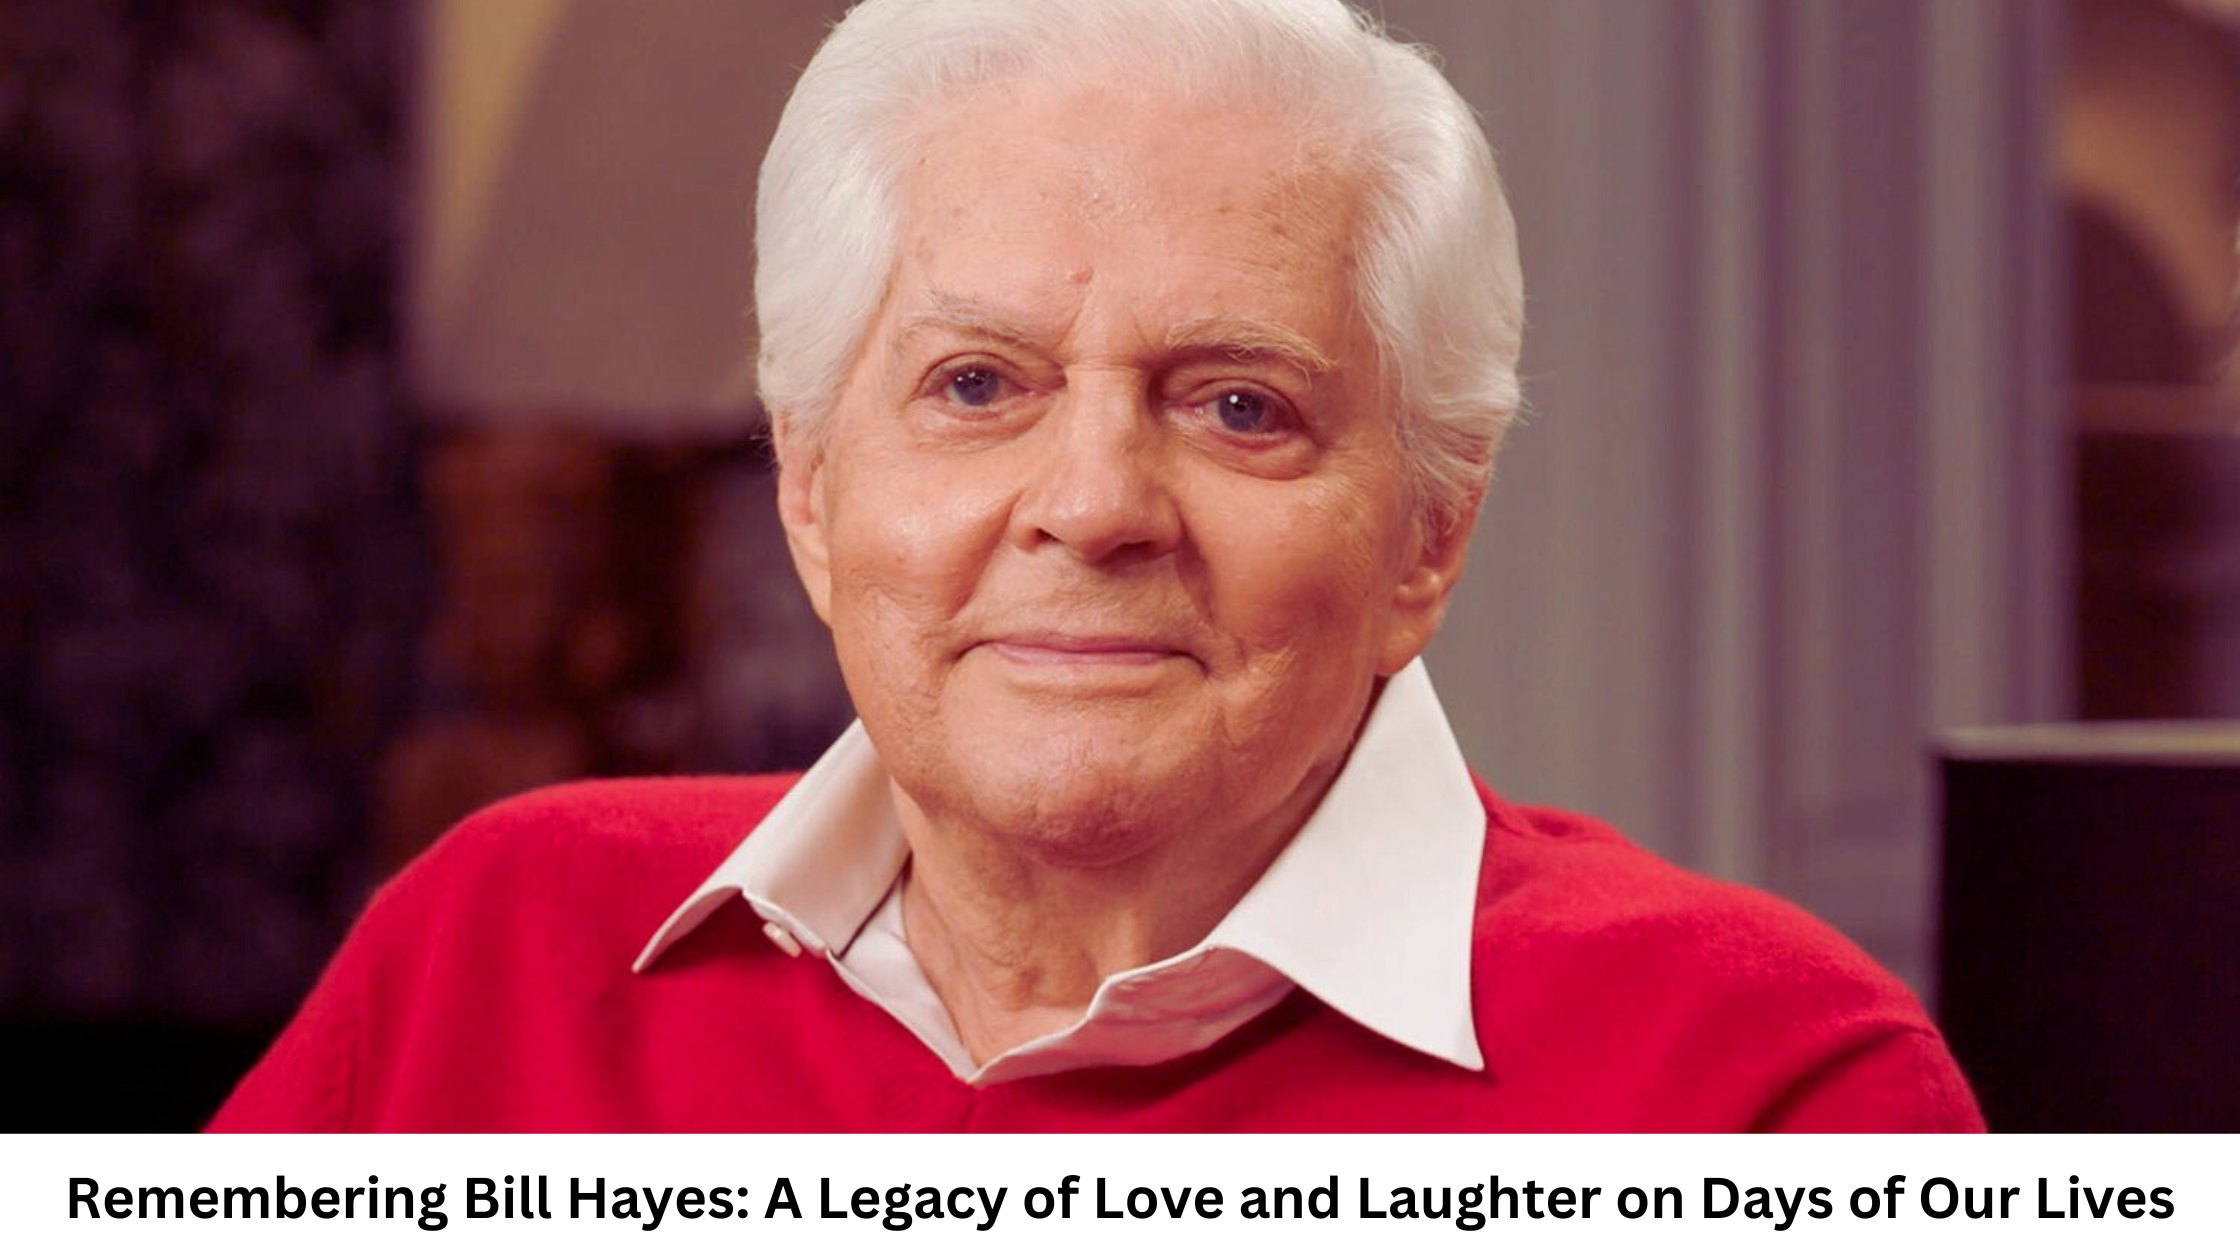 Bill Hayes Died